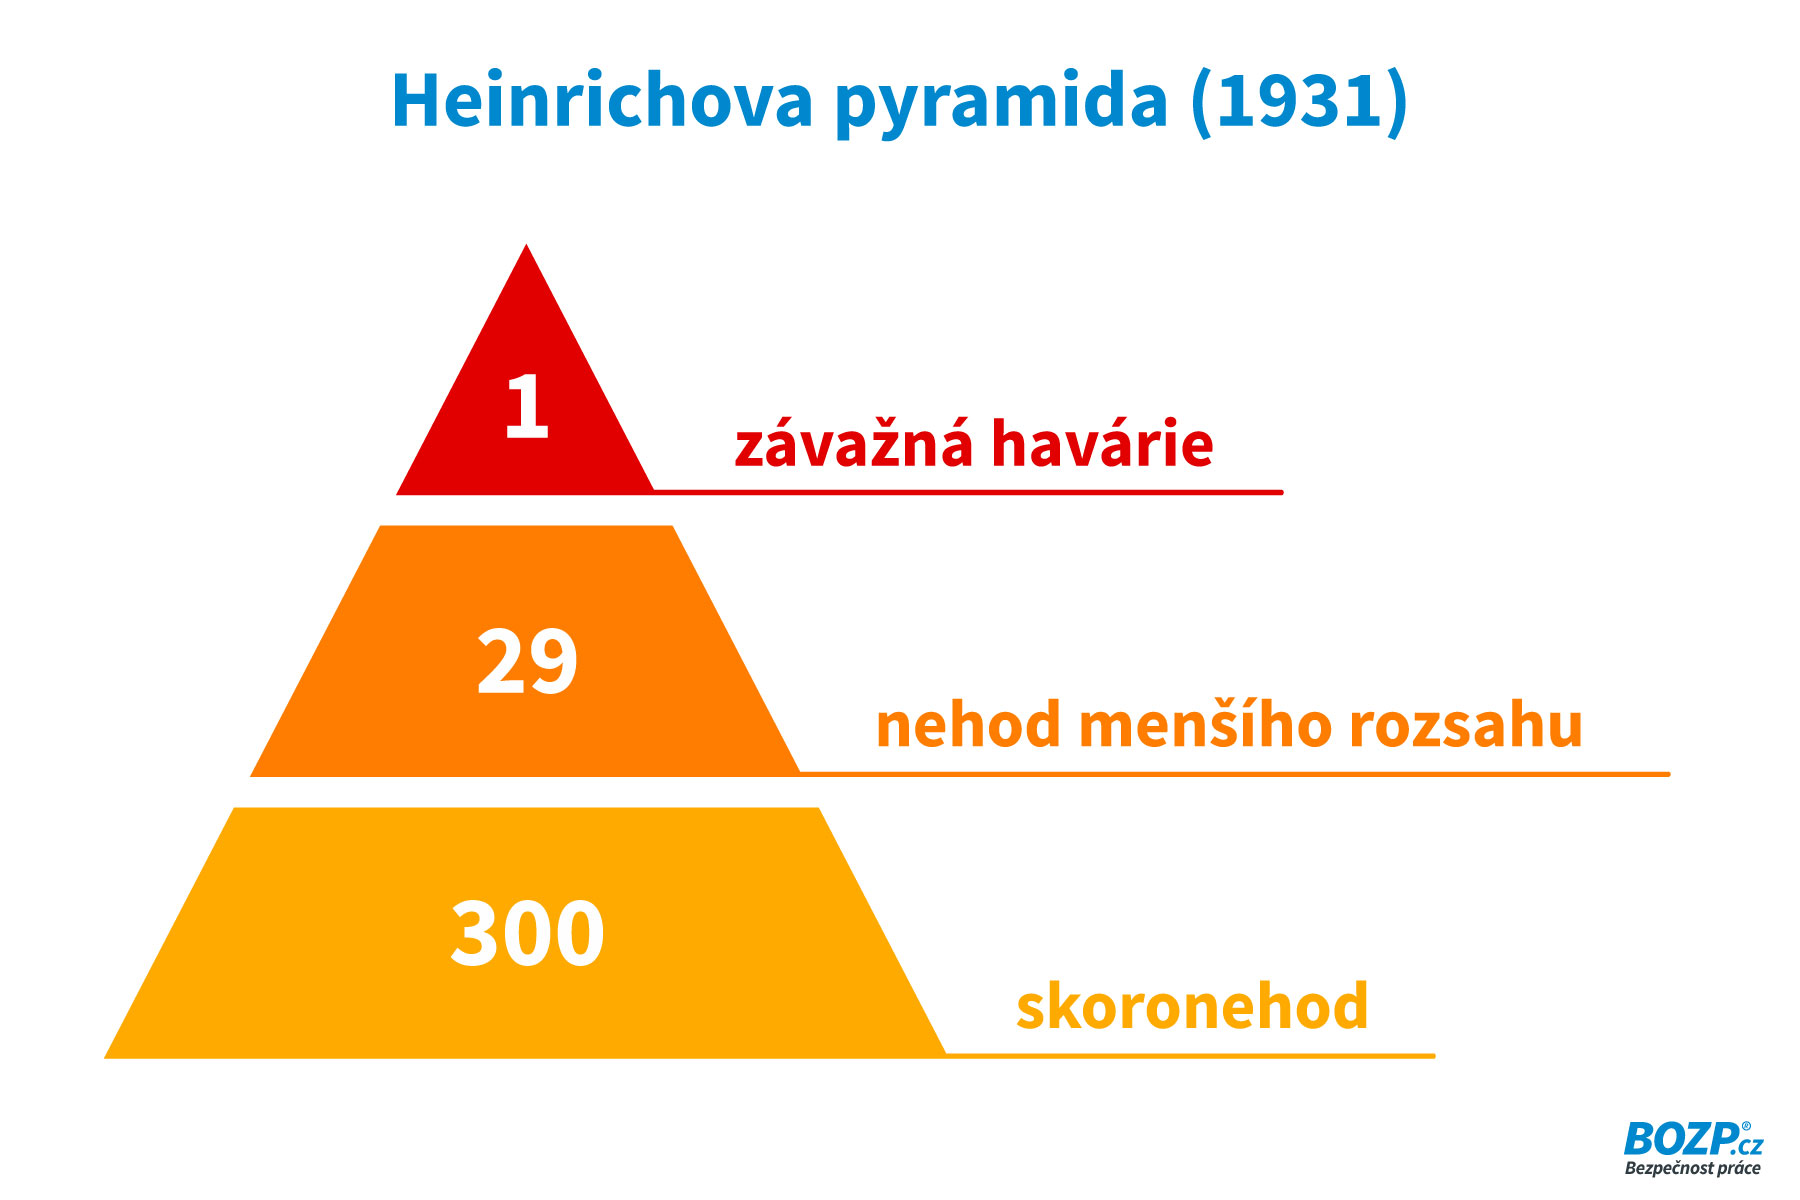 Heinrichova pyramida